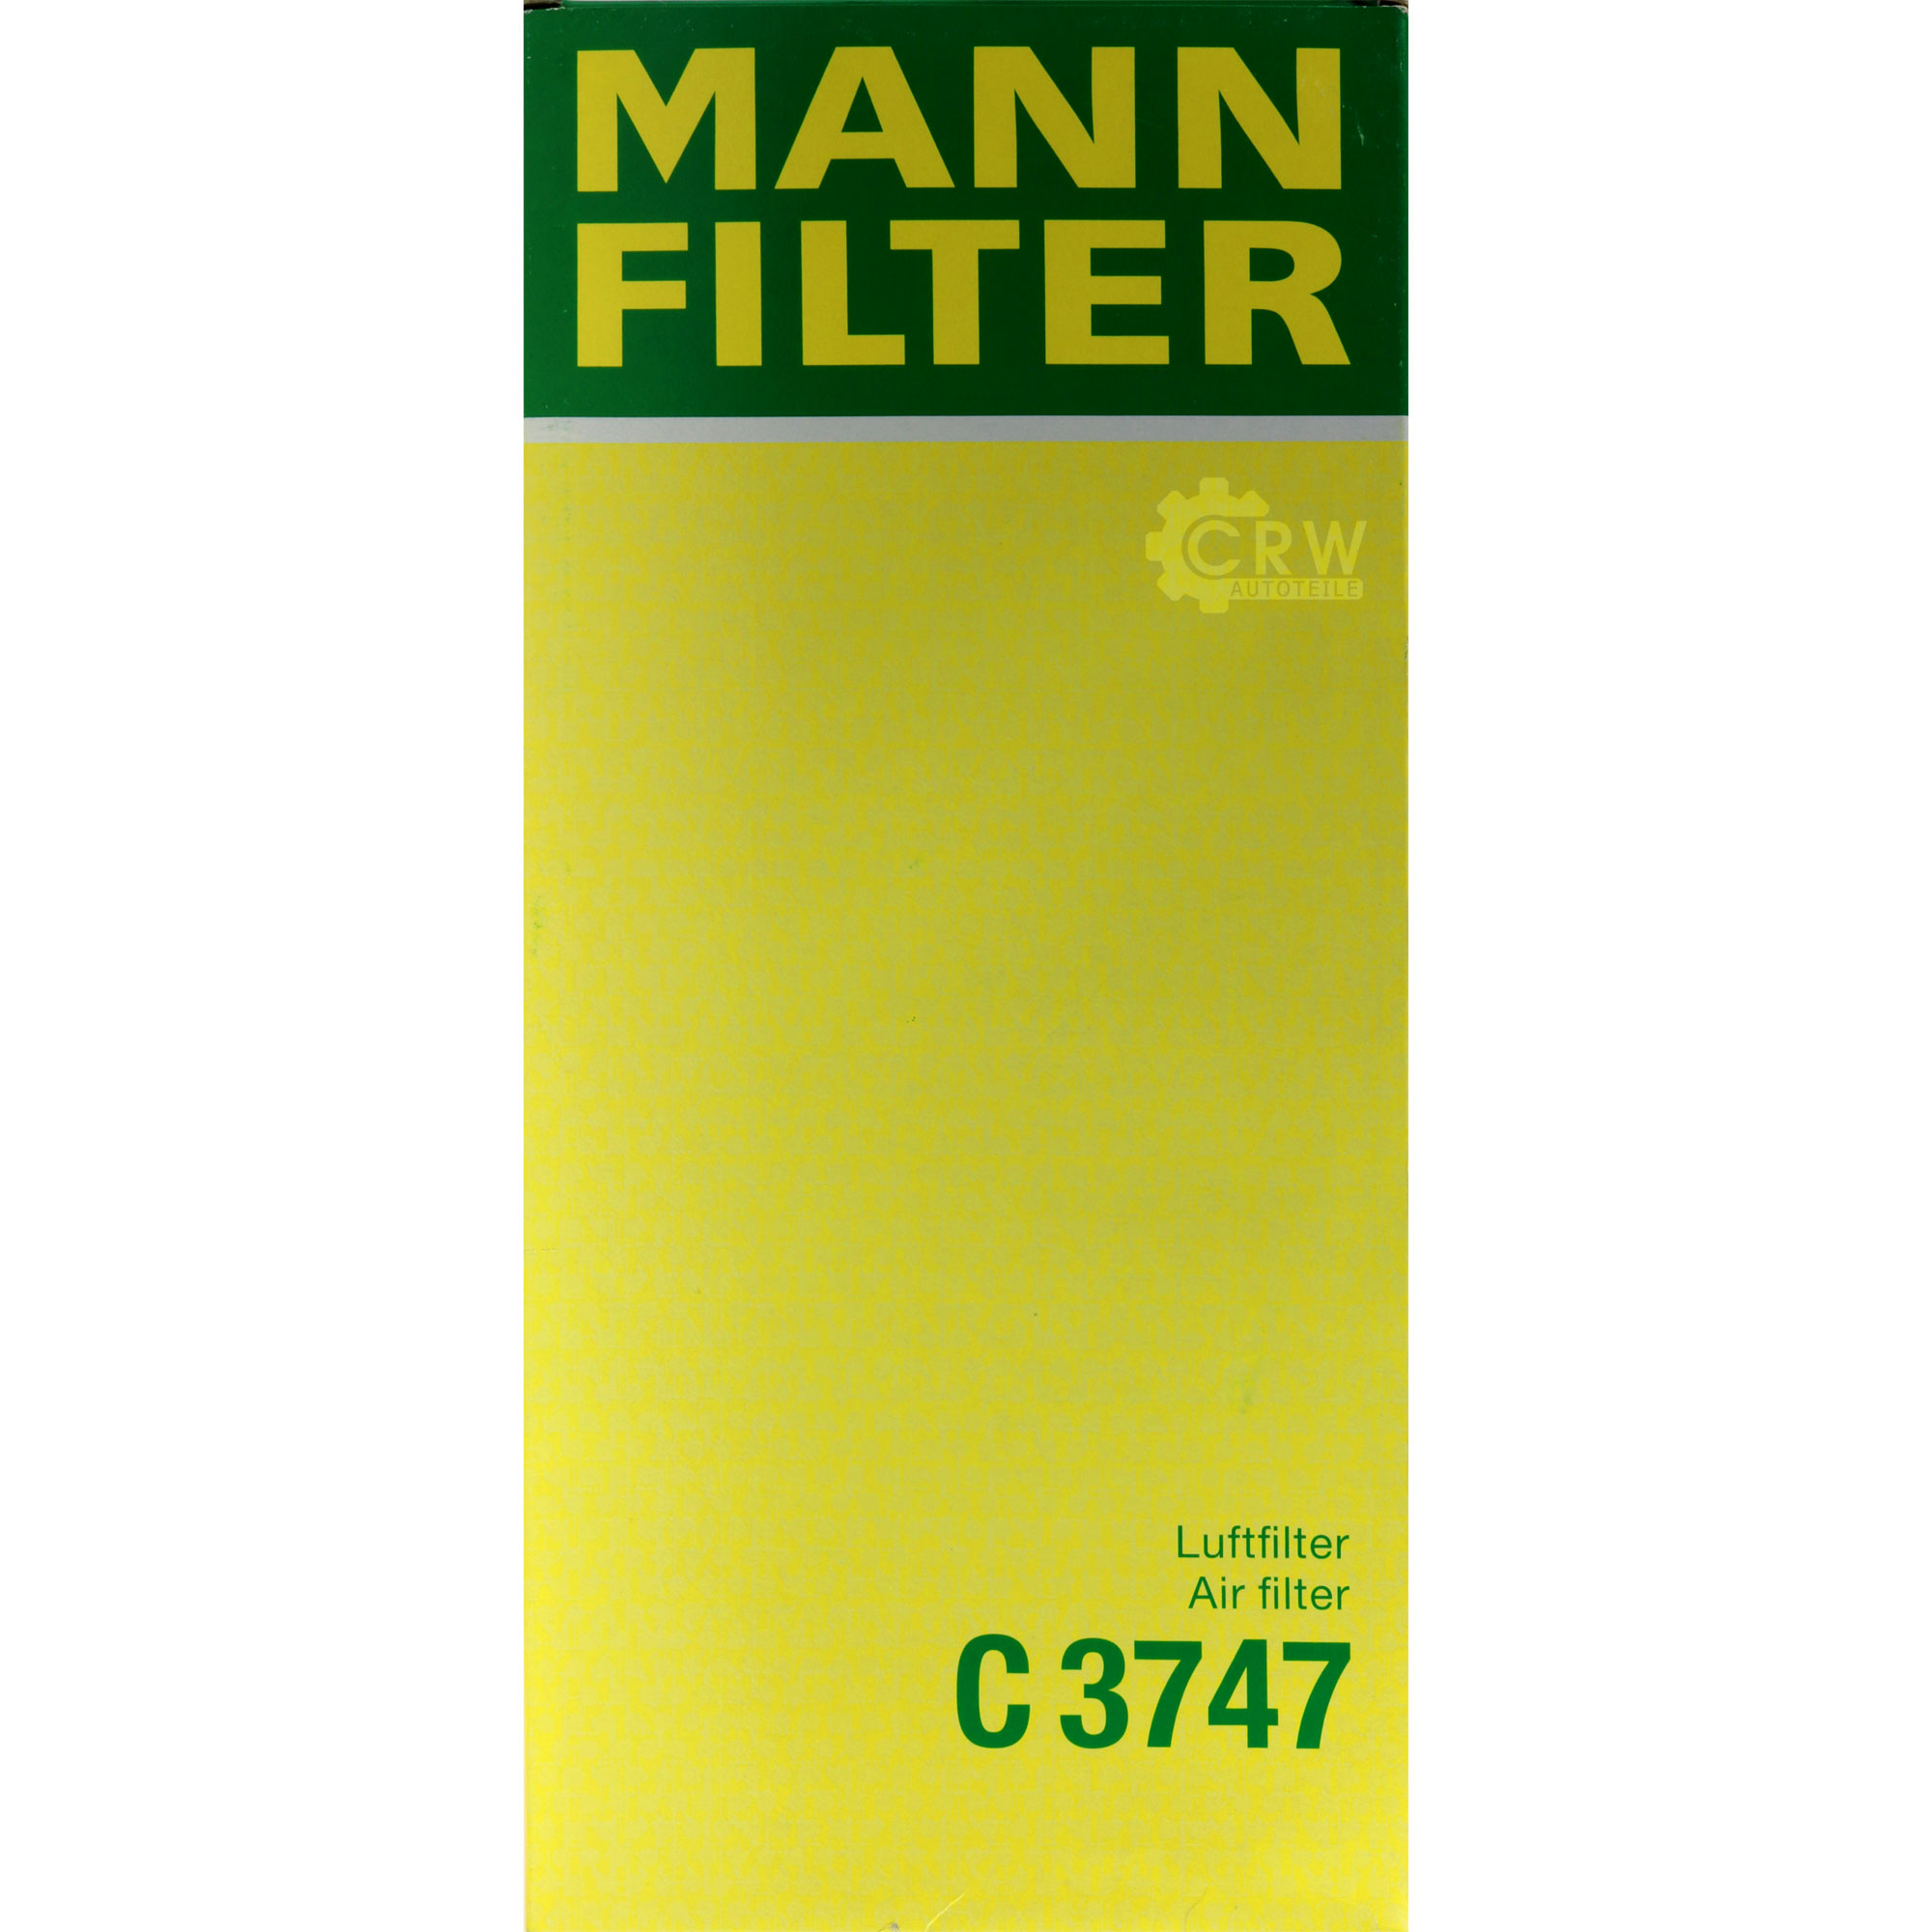 MANN-FILTER Luftfilter für Subaru Forester SG 2.0 X AWD SF Impreza Station